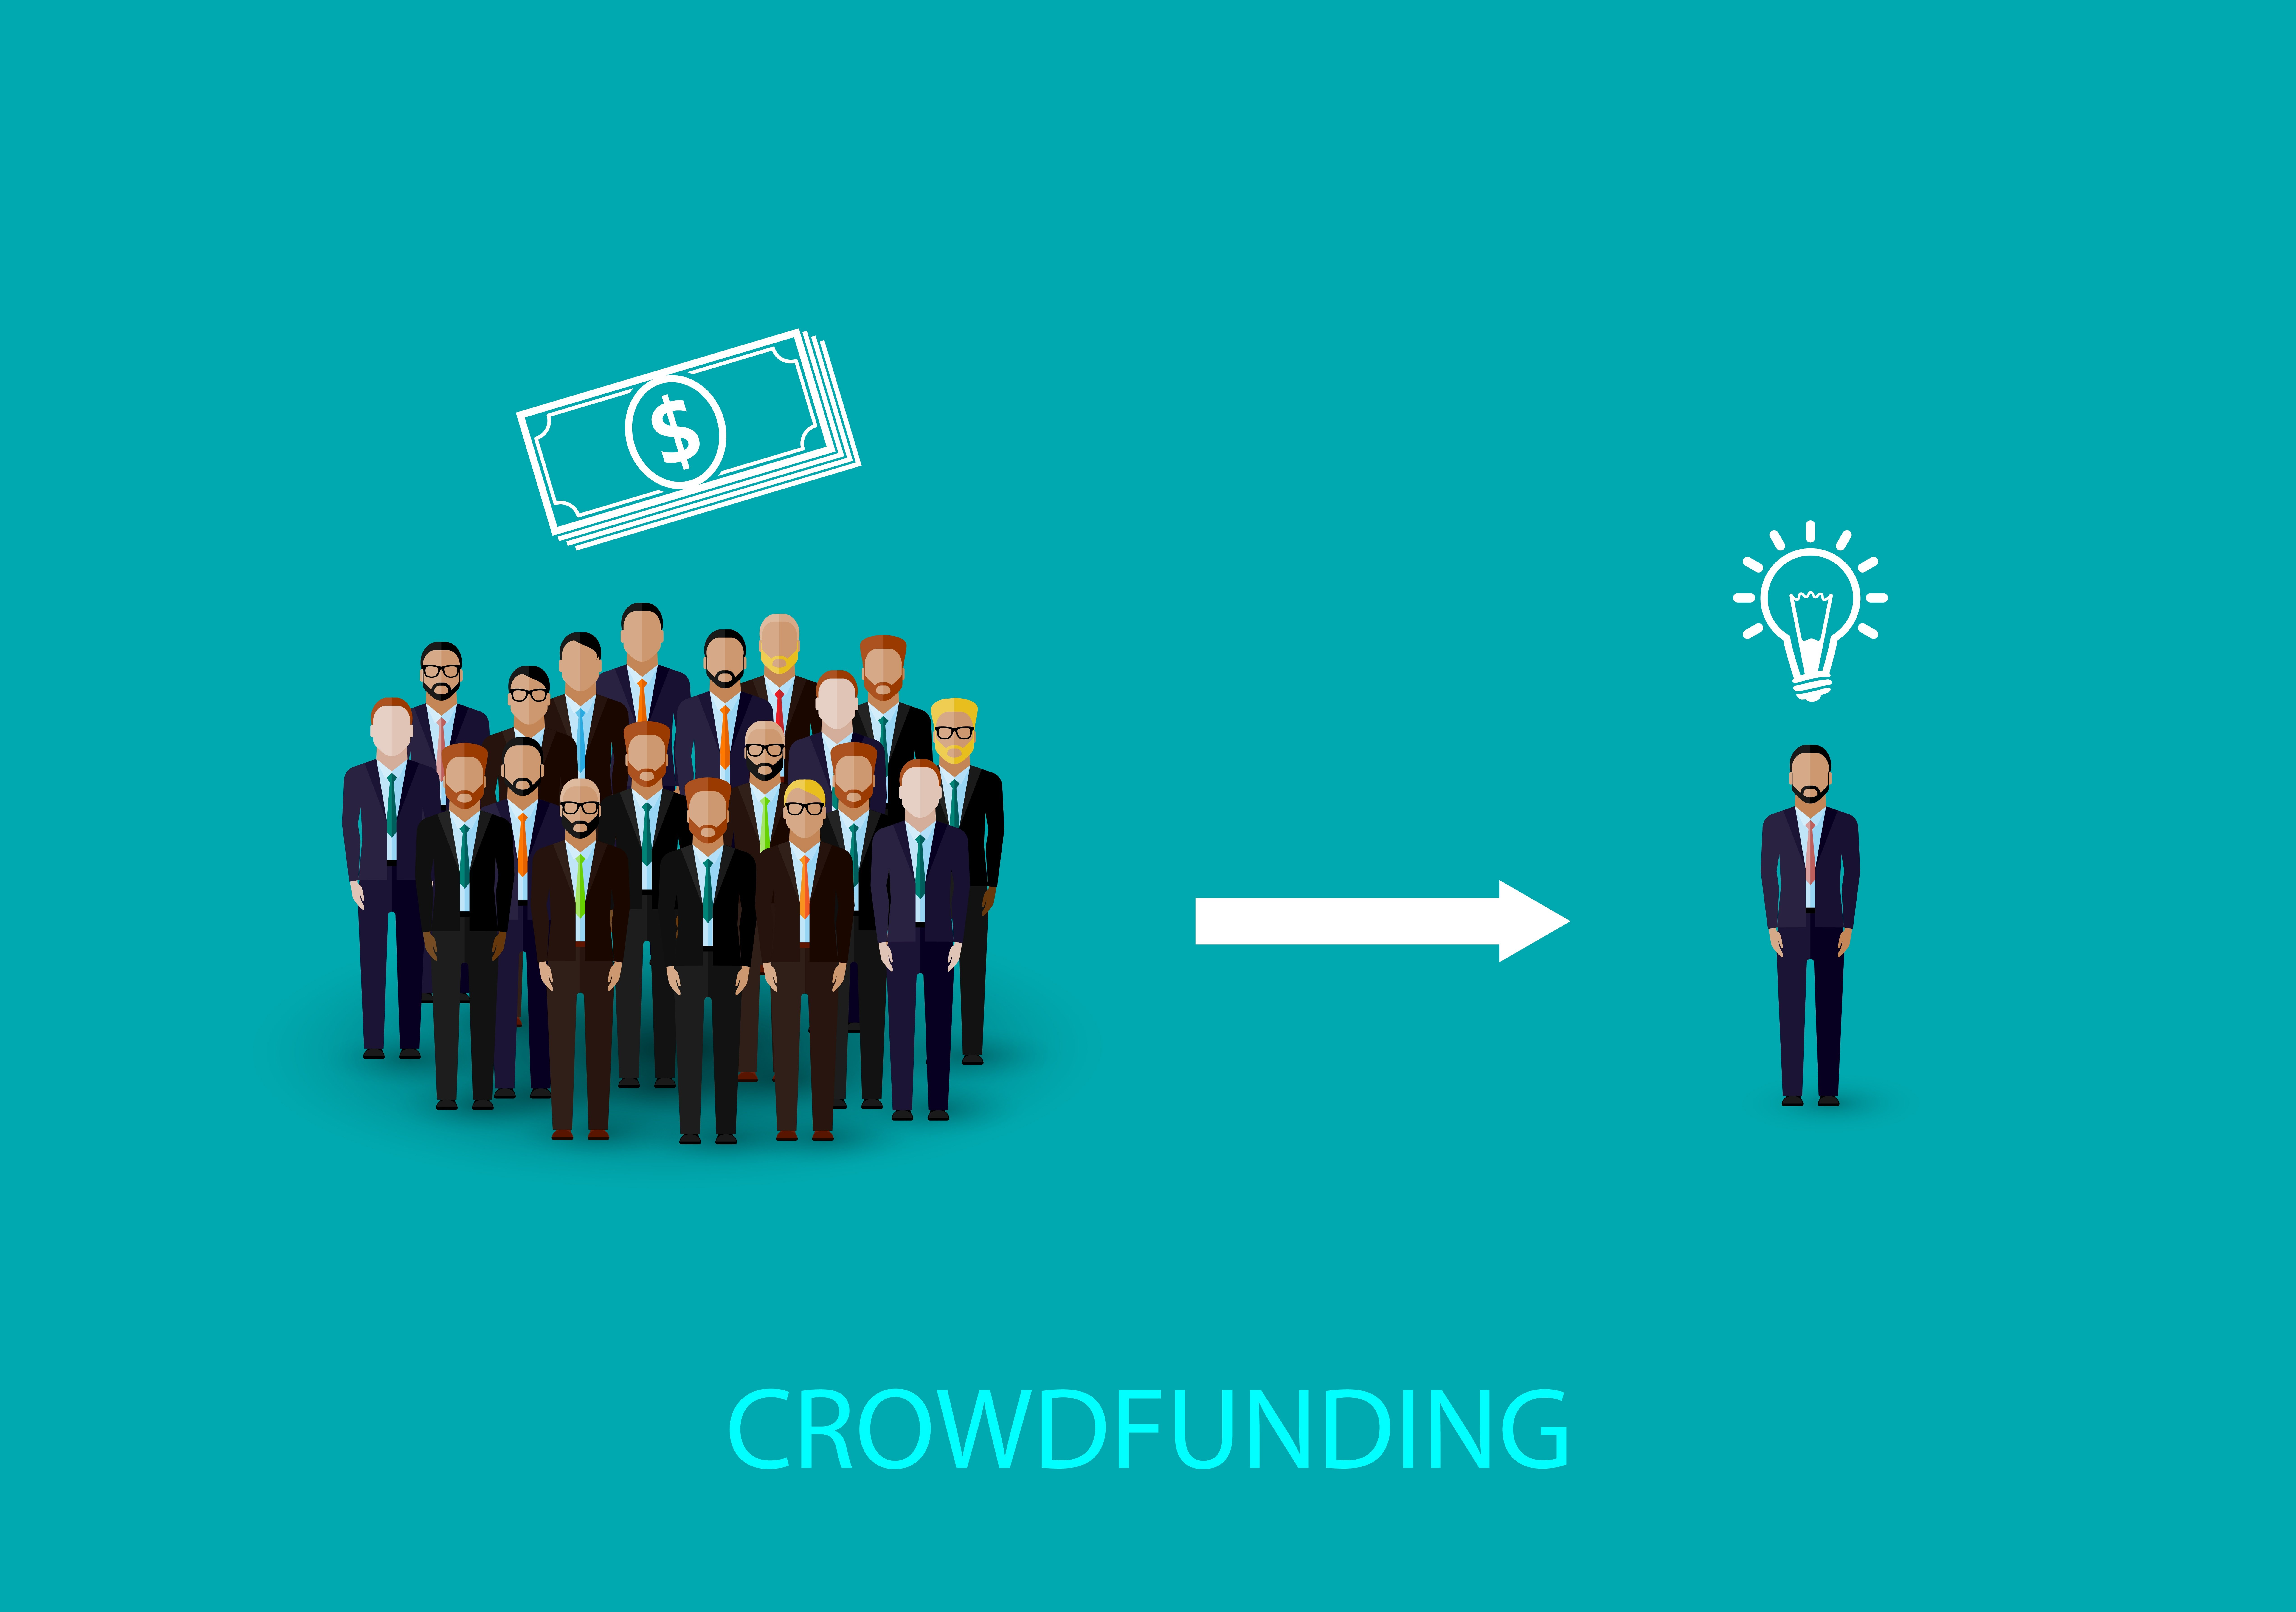 Projets innovants et crowdfunding : l'innovation financement